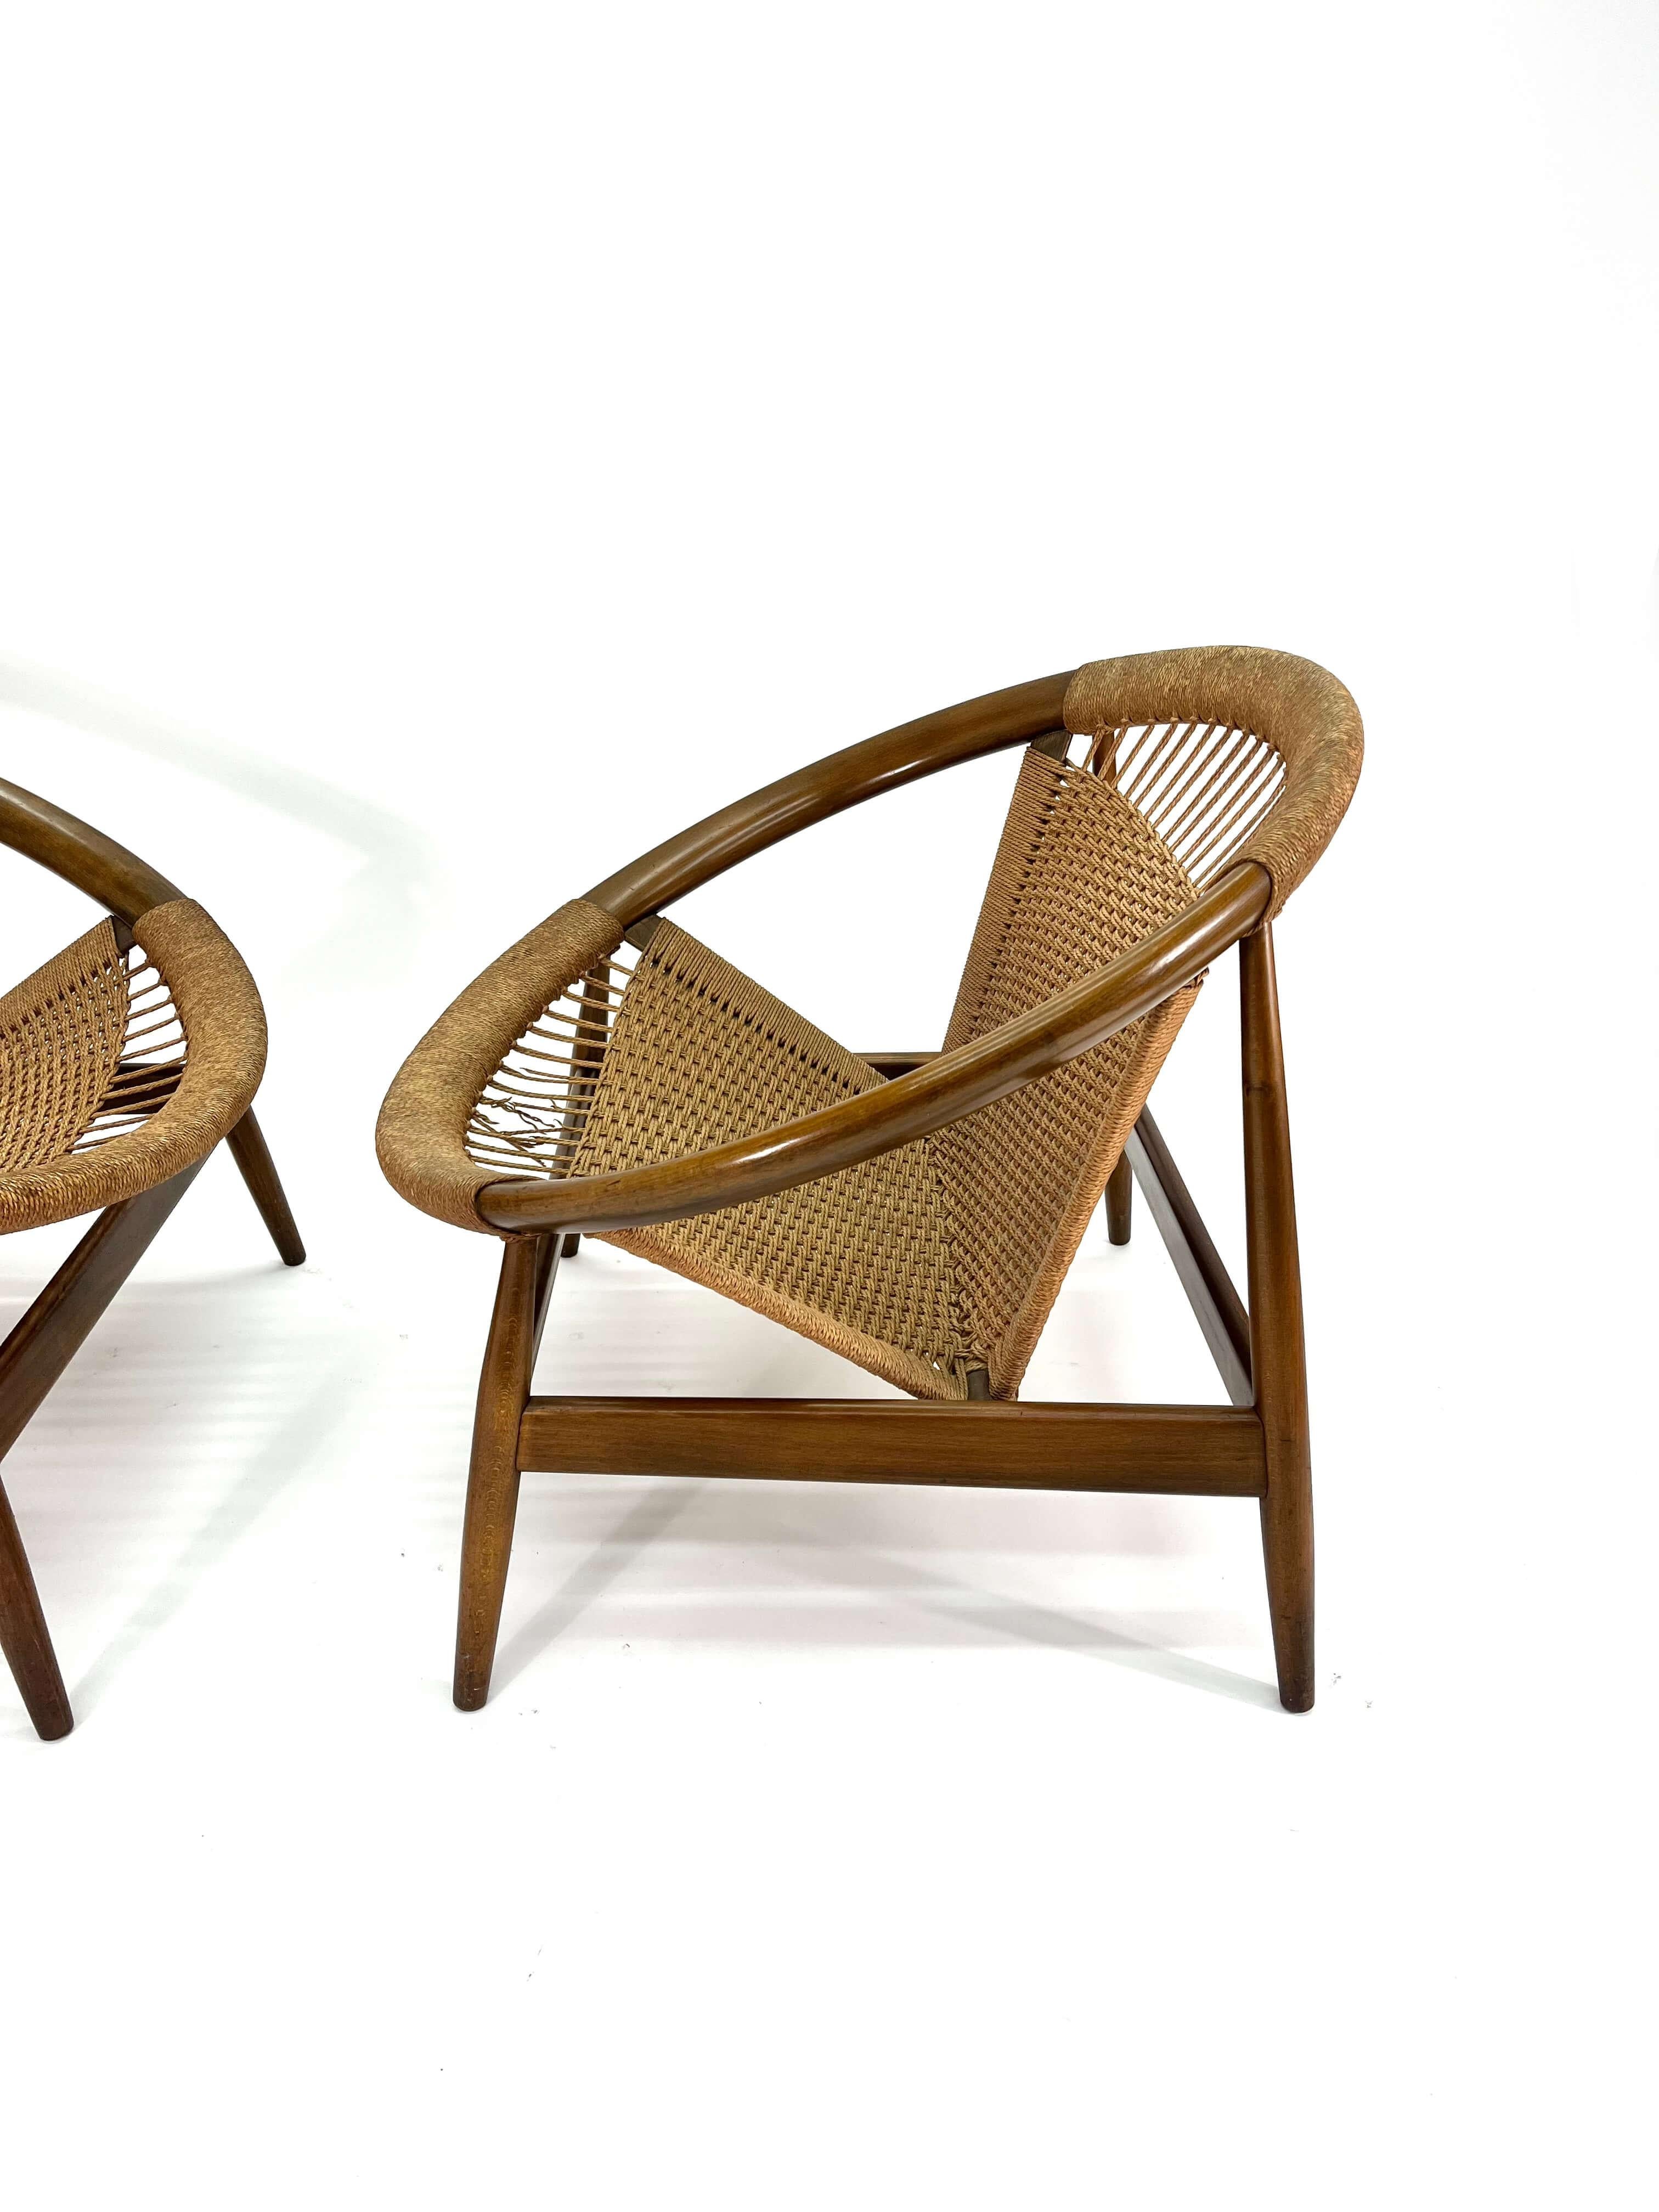 Mid-Century Modern Ringstol Lounge Chair by Illum Wikkelsø en vente 2